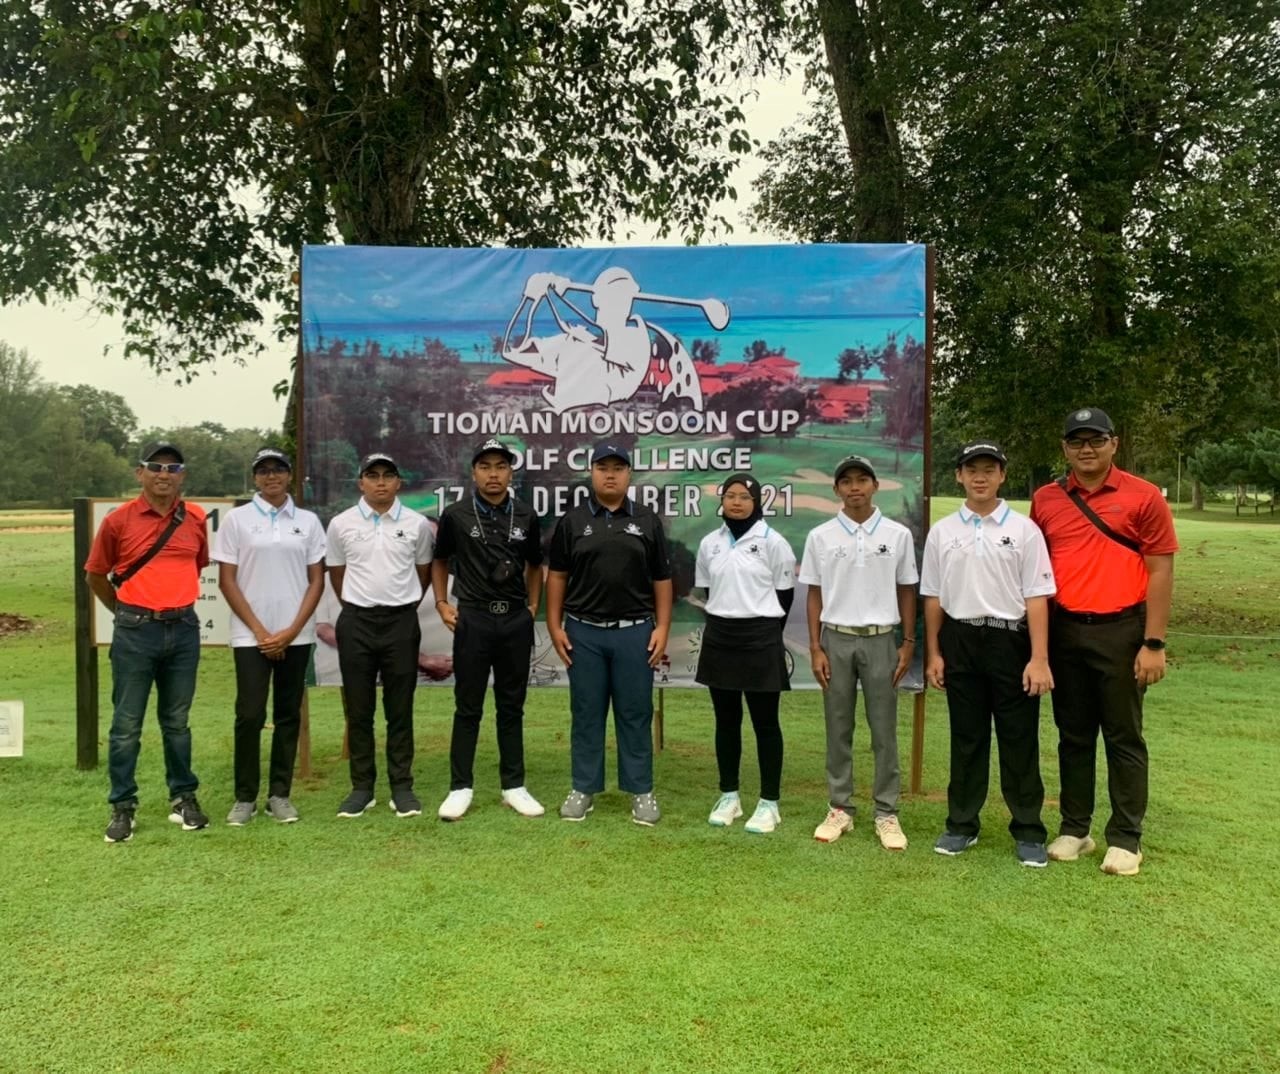 2021 Tioman Monsoon Cup Golf Challenge